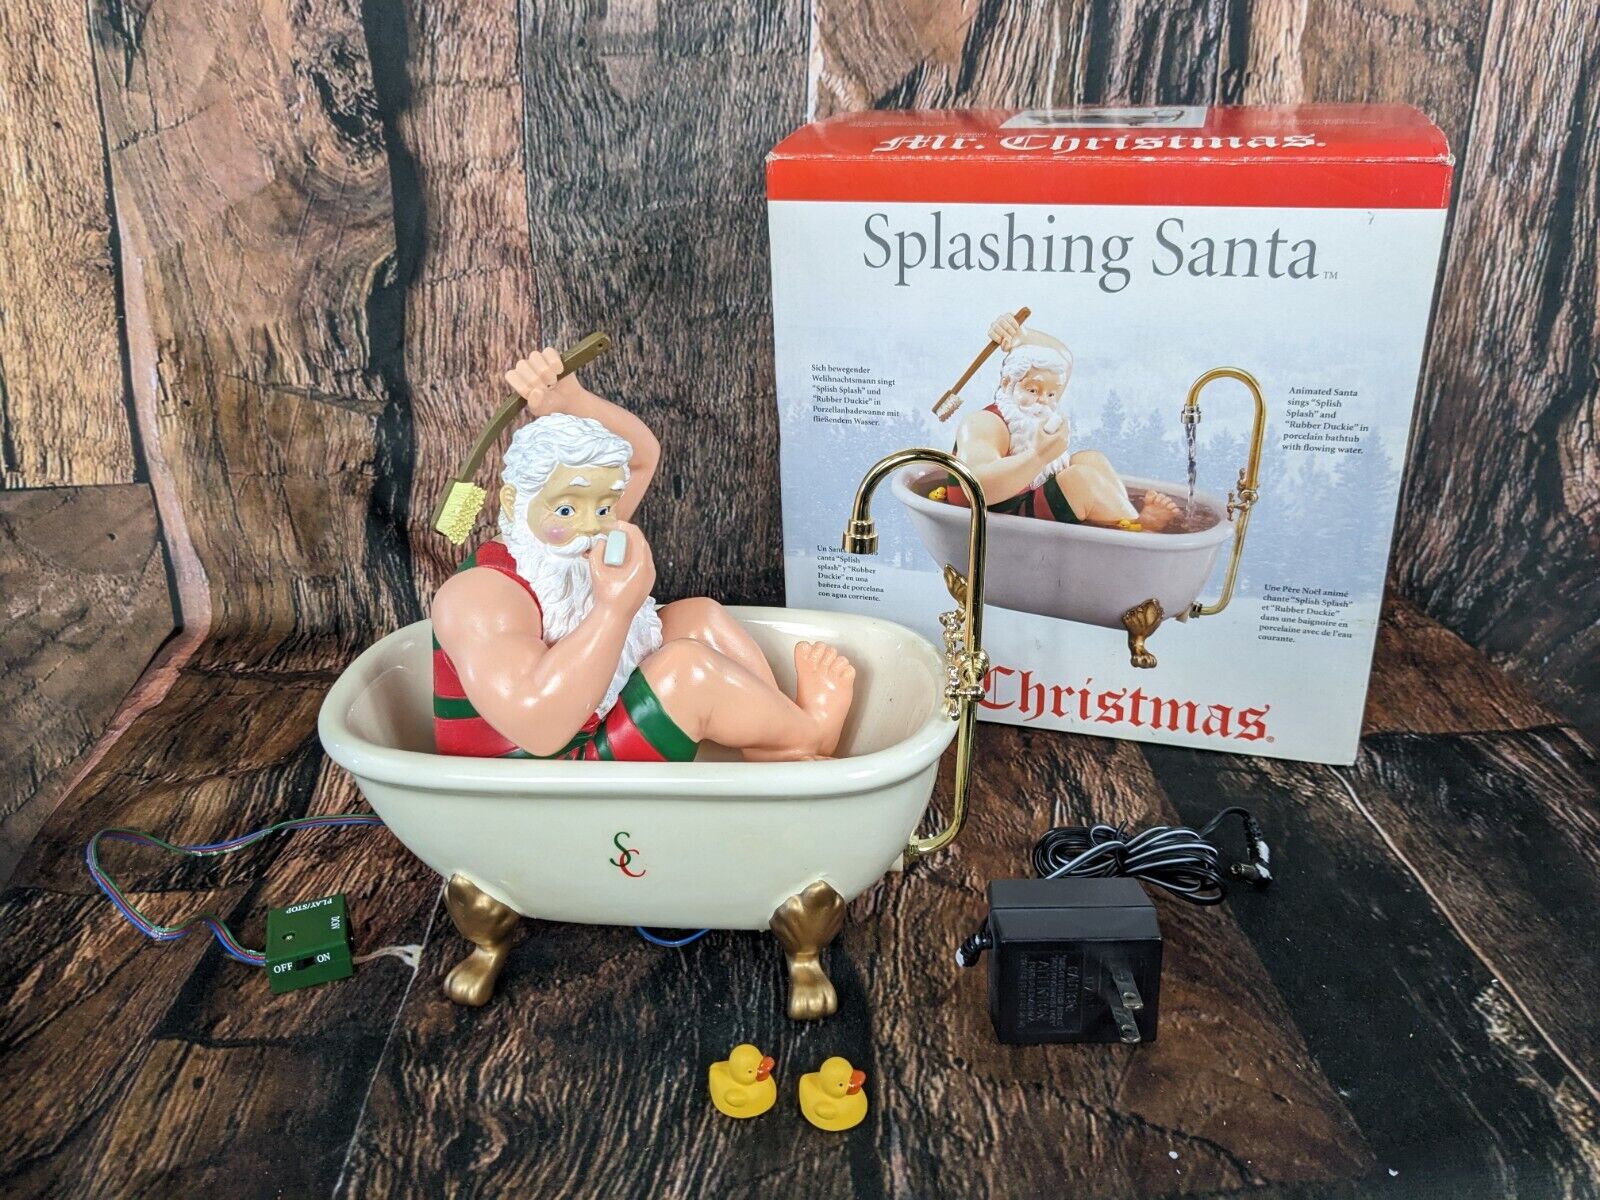 MR. CHRISTMAS SPLASHING SANTA ANIMATED 2001 FLOWING WATER 2 SONGS BATHTUB READ